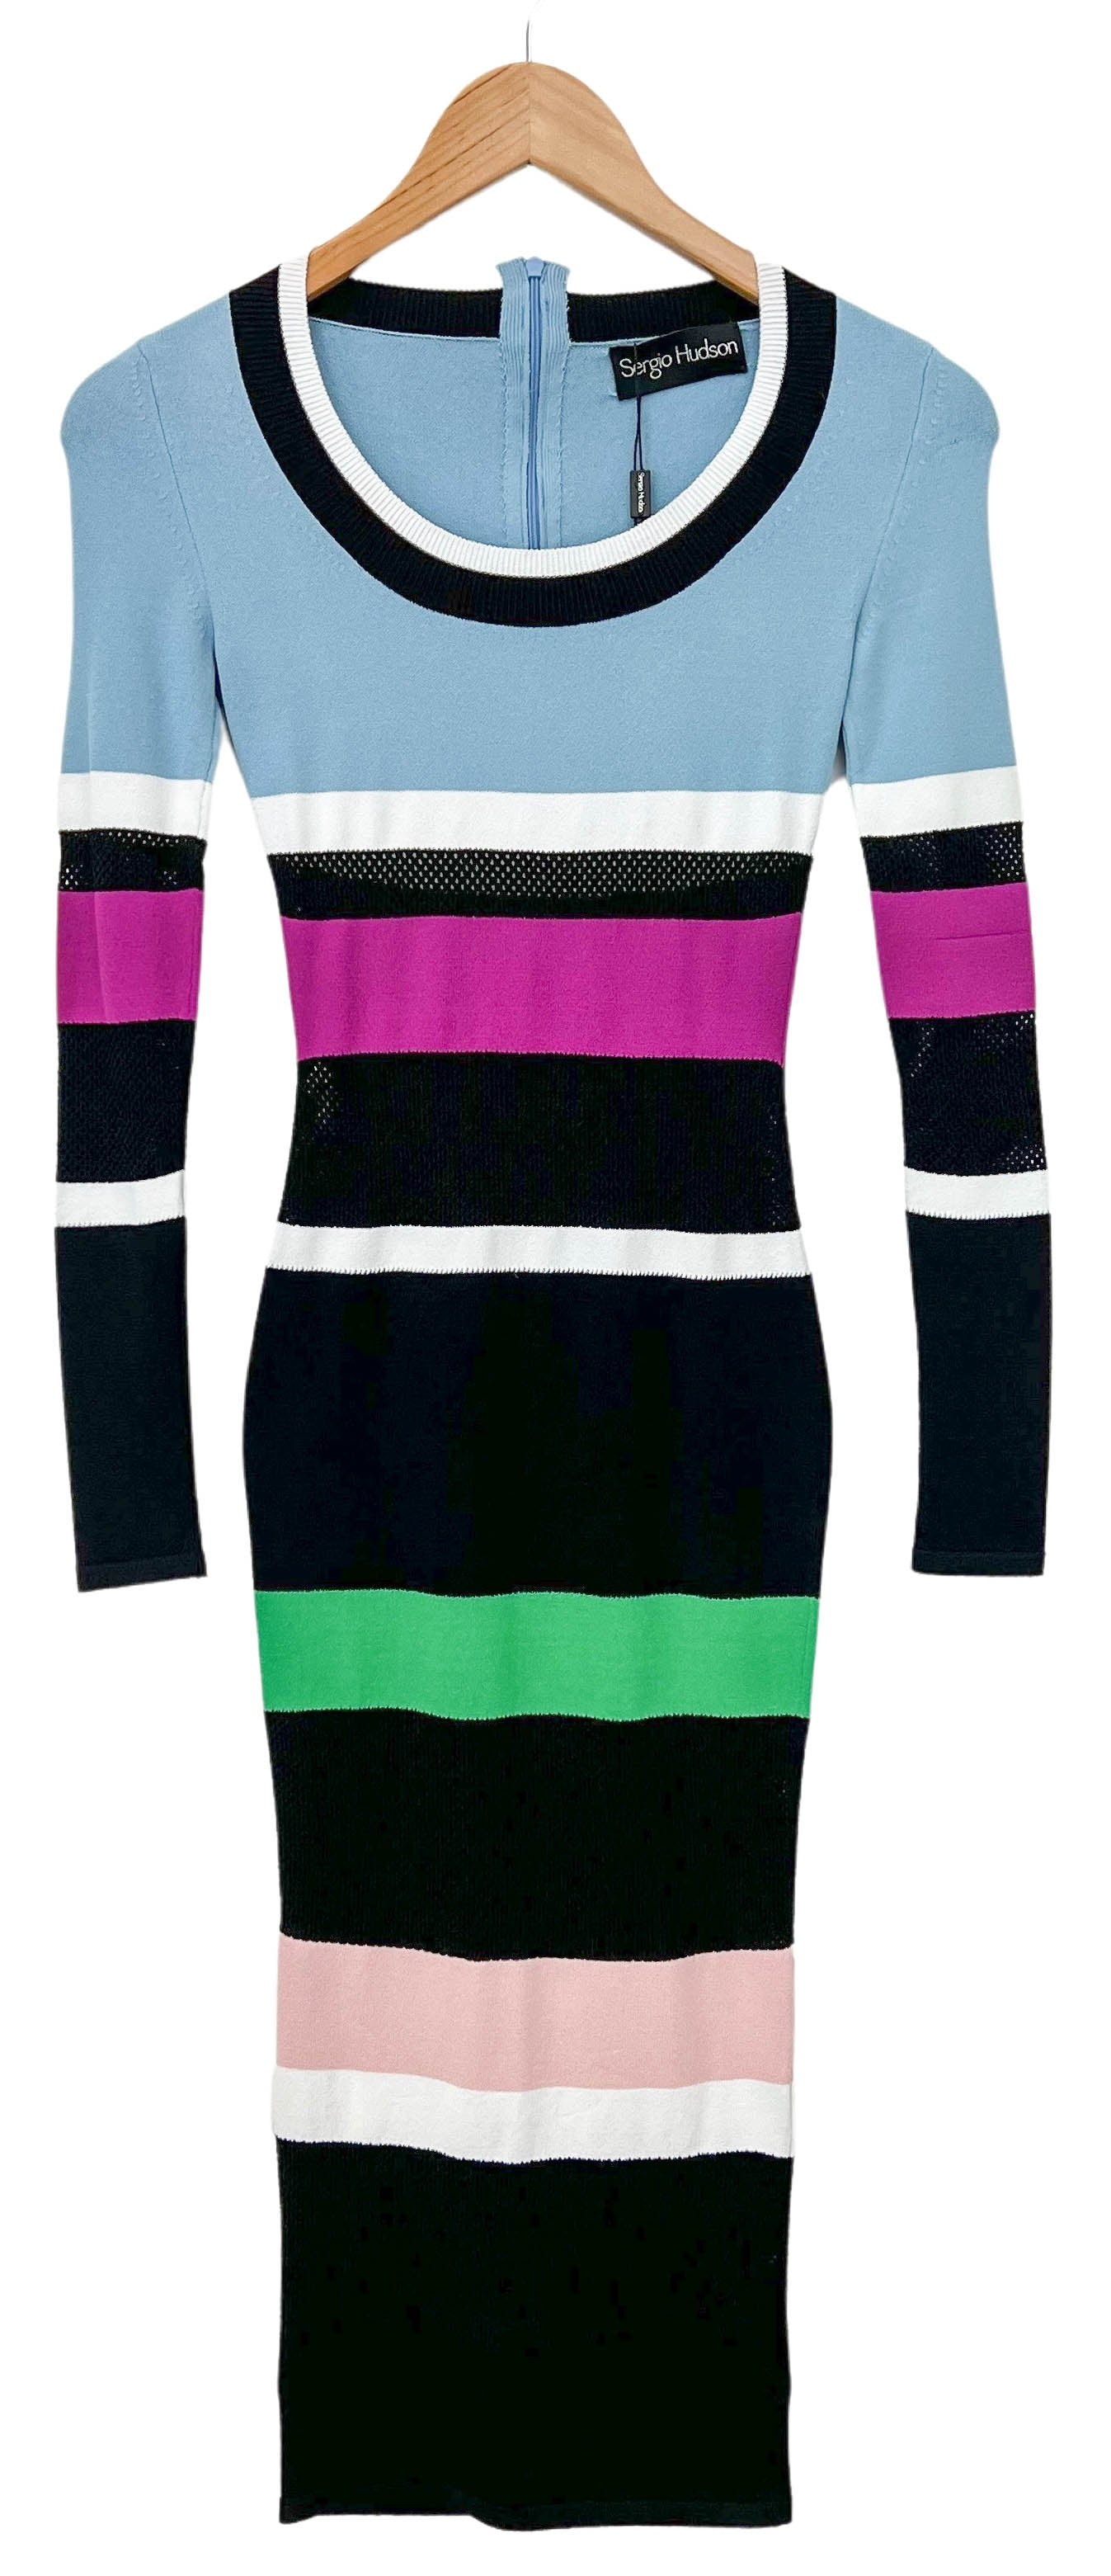 Sergio Hudson Long Sleeve Midi Dress in Multi Stripe - Discounts on Sergio Hudson at UAL